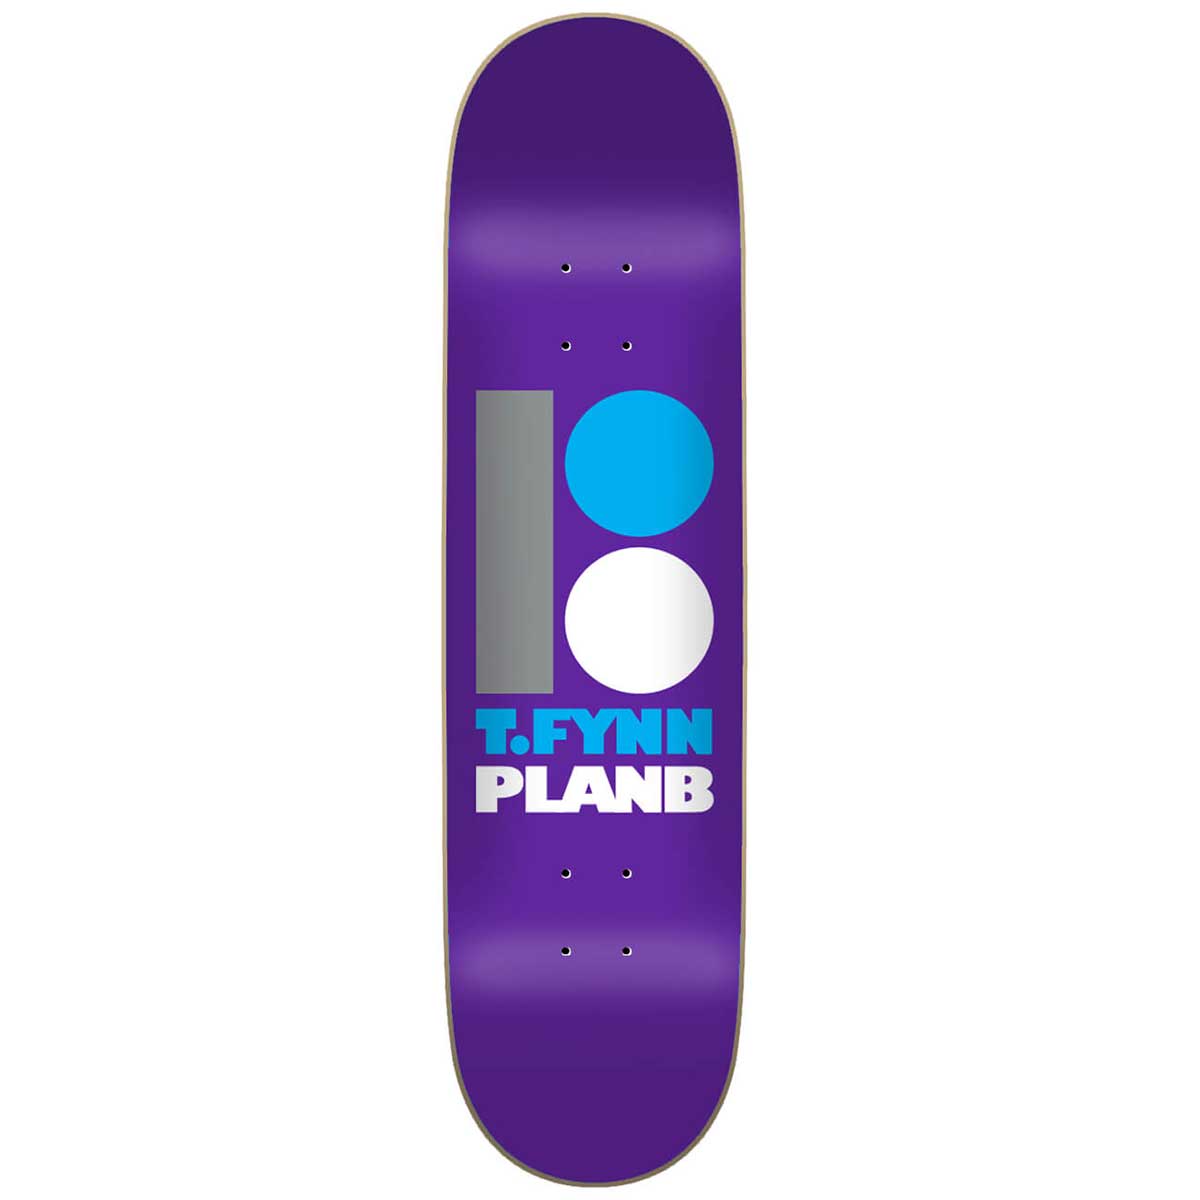 Plan B Original Fynn Skateboard Deck 